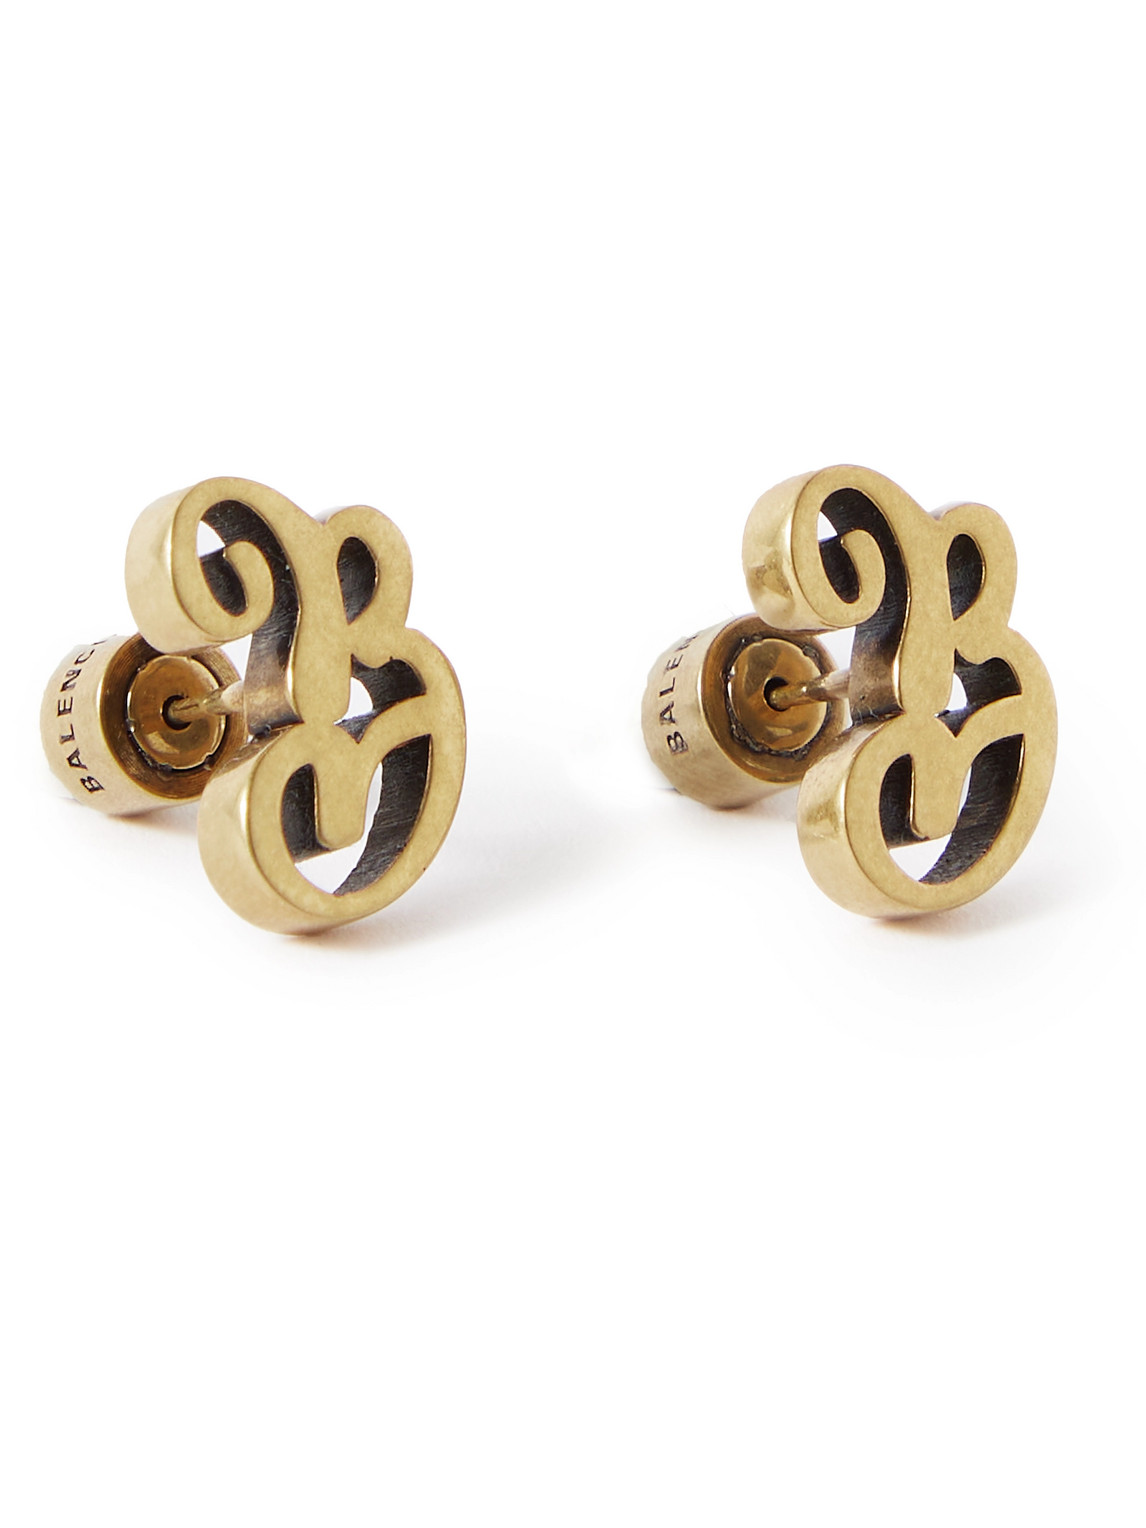 Antiqued Gold-Tone Earrings